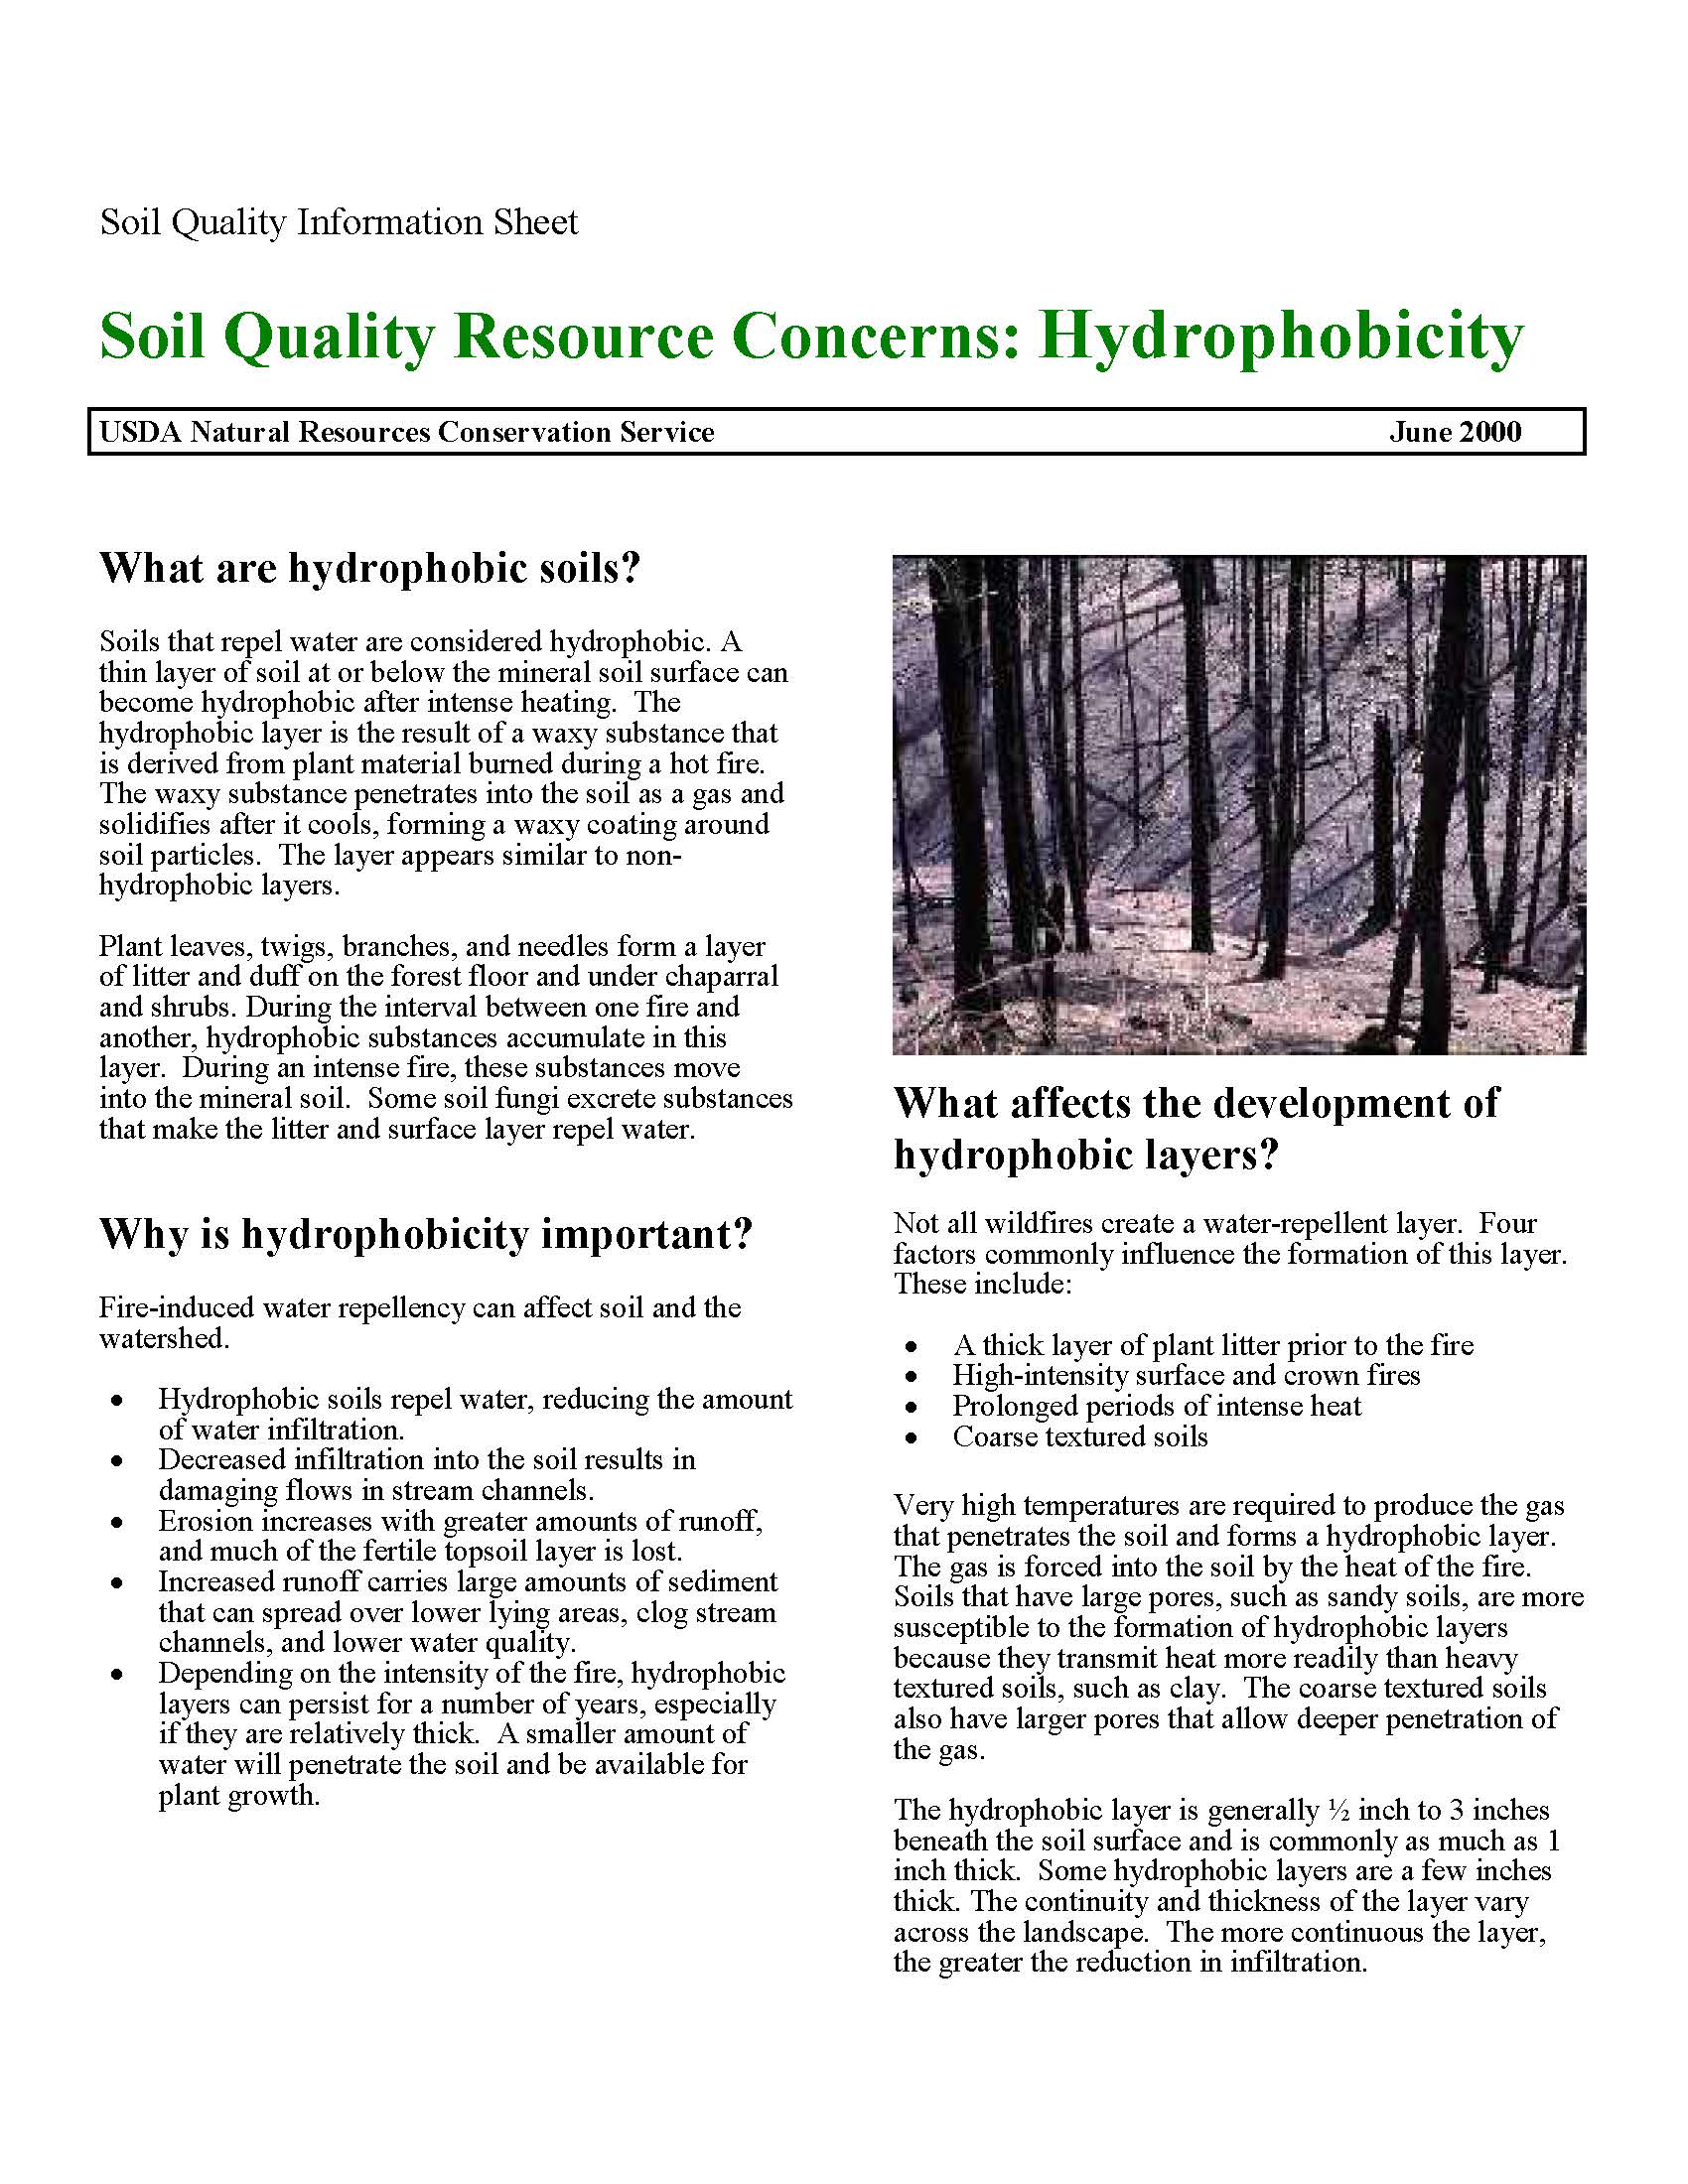 SQ-Resource Concerns-Hydrophobicity